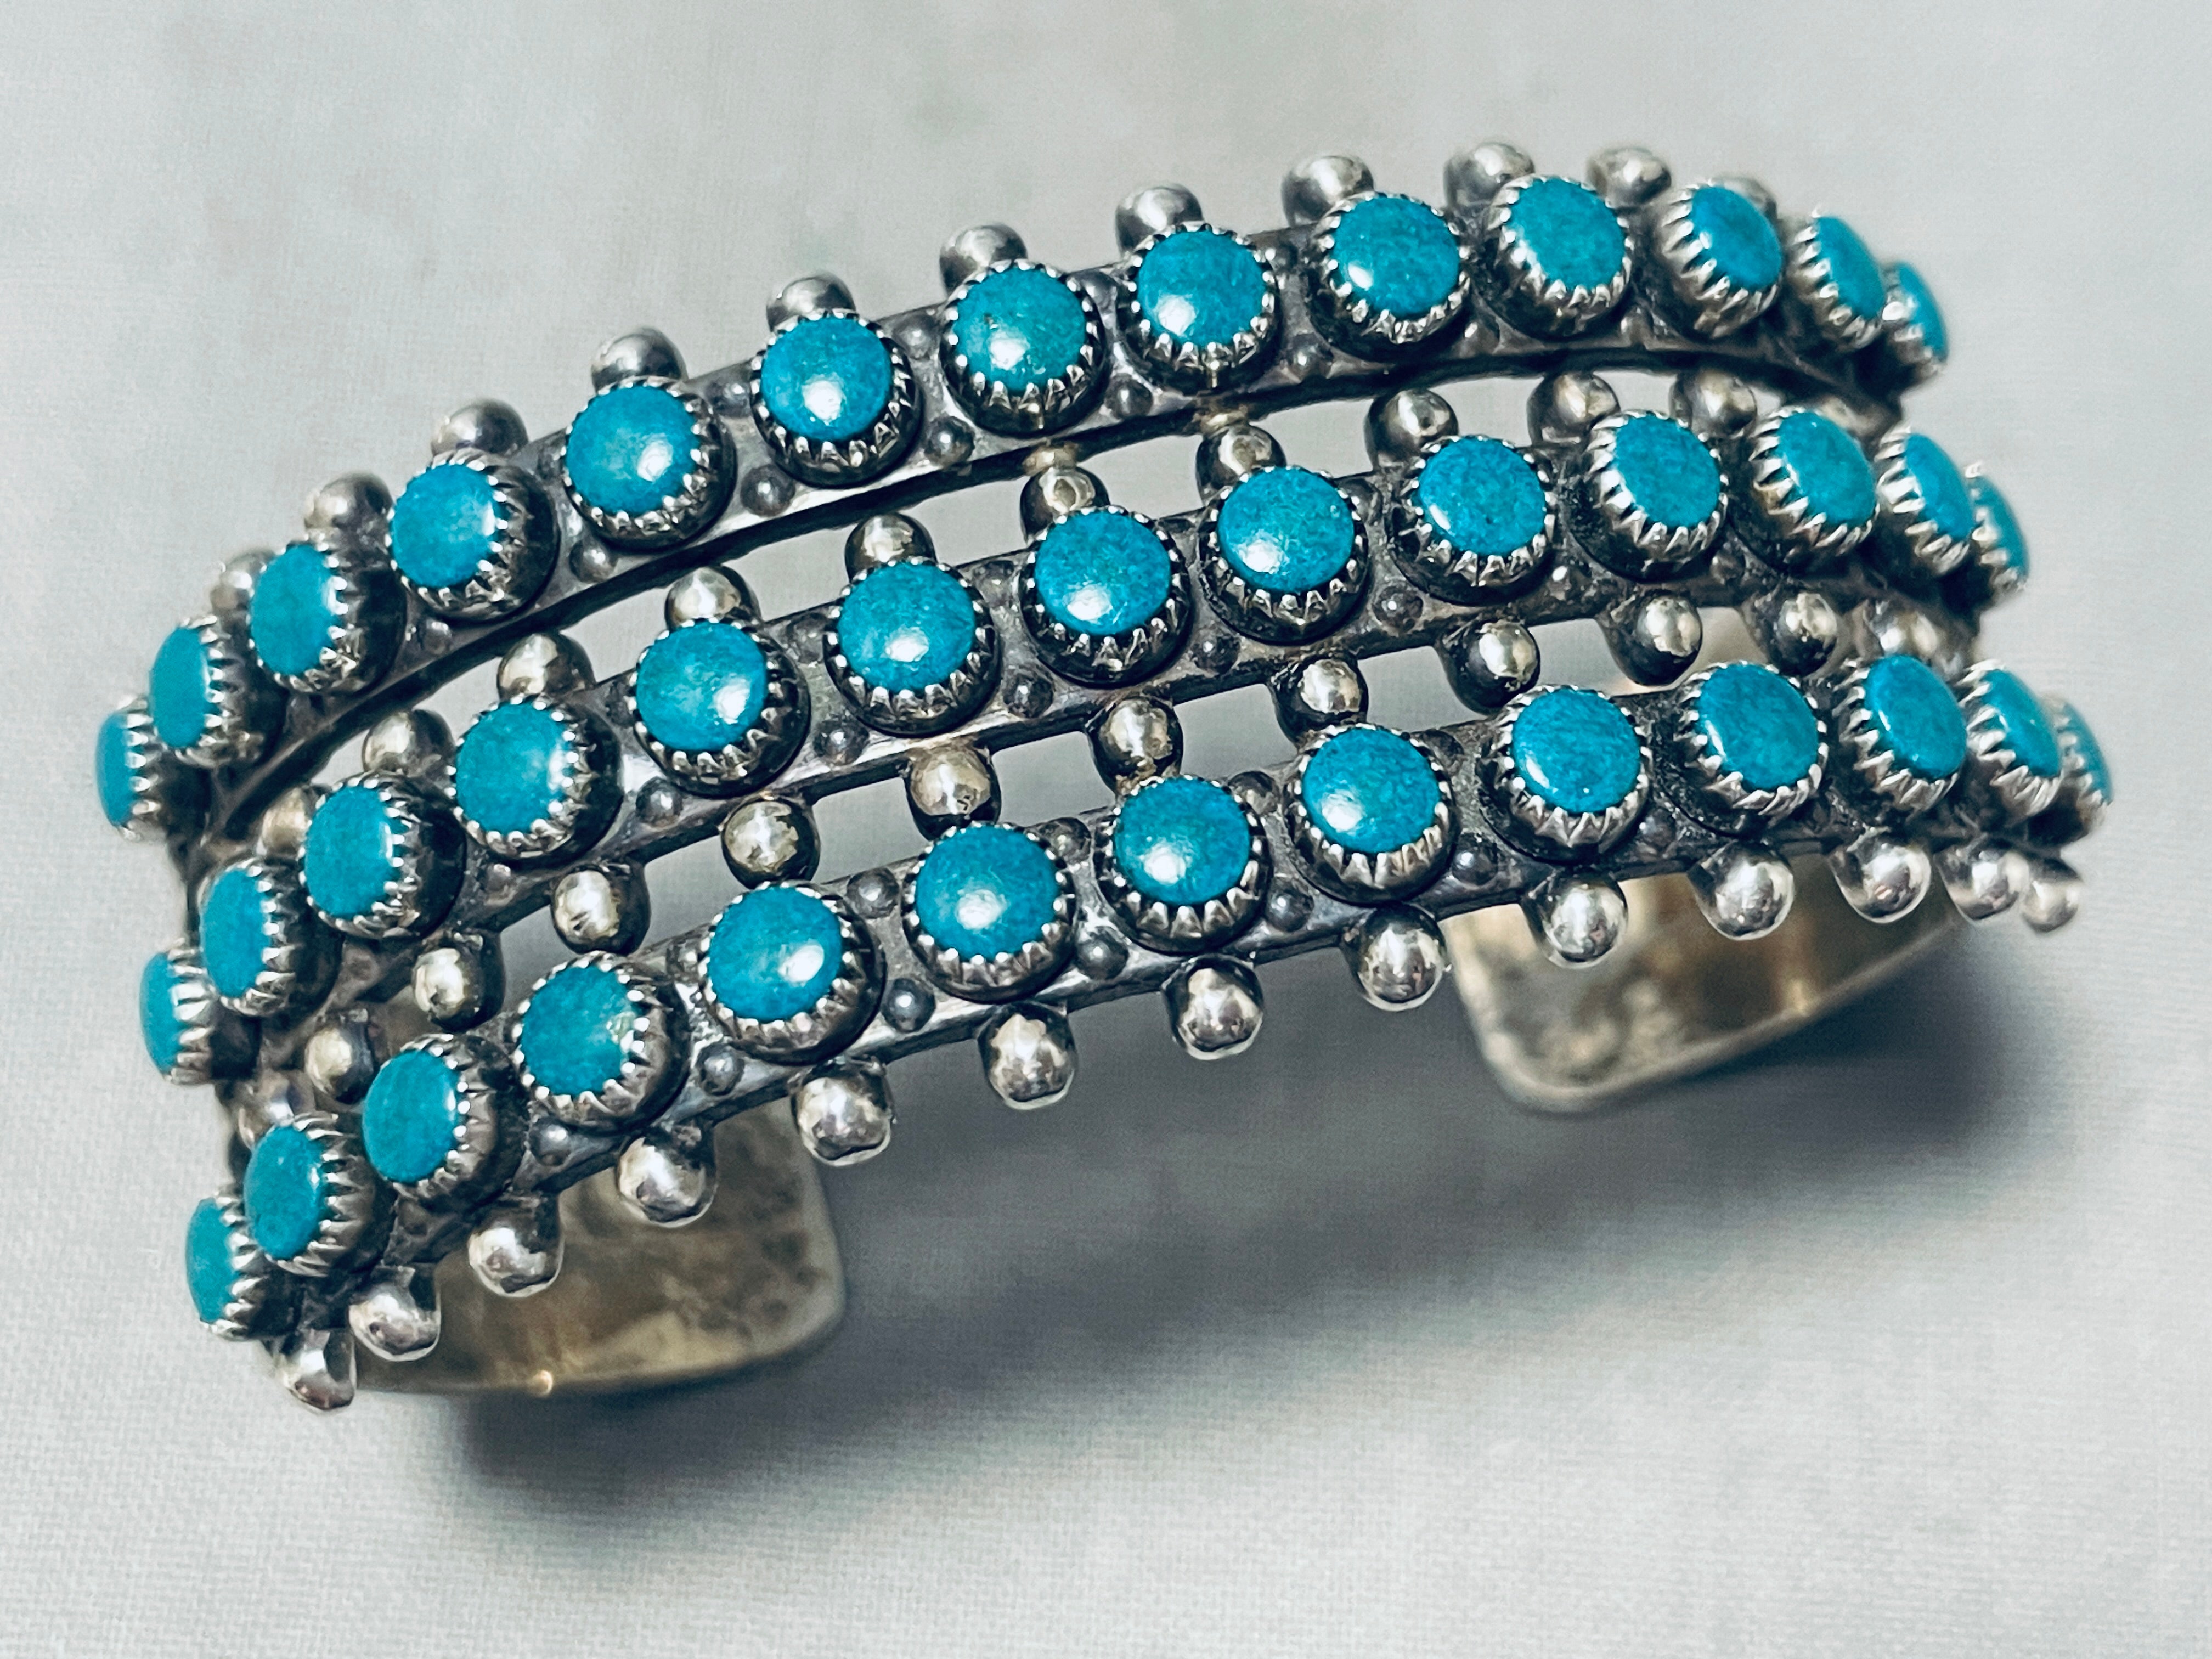 Antique/Vint Silver SNAKE Bracelet Or Upper Arm Bangle TURQUOISE & - Ruby  Lane